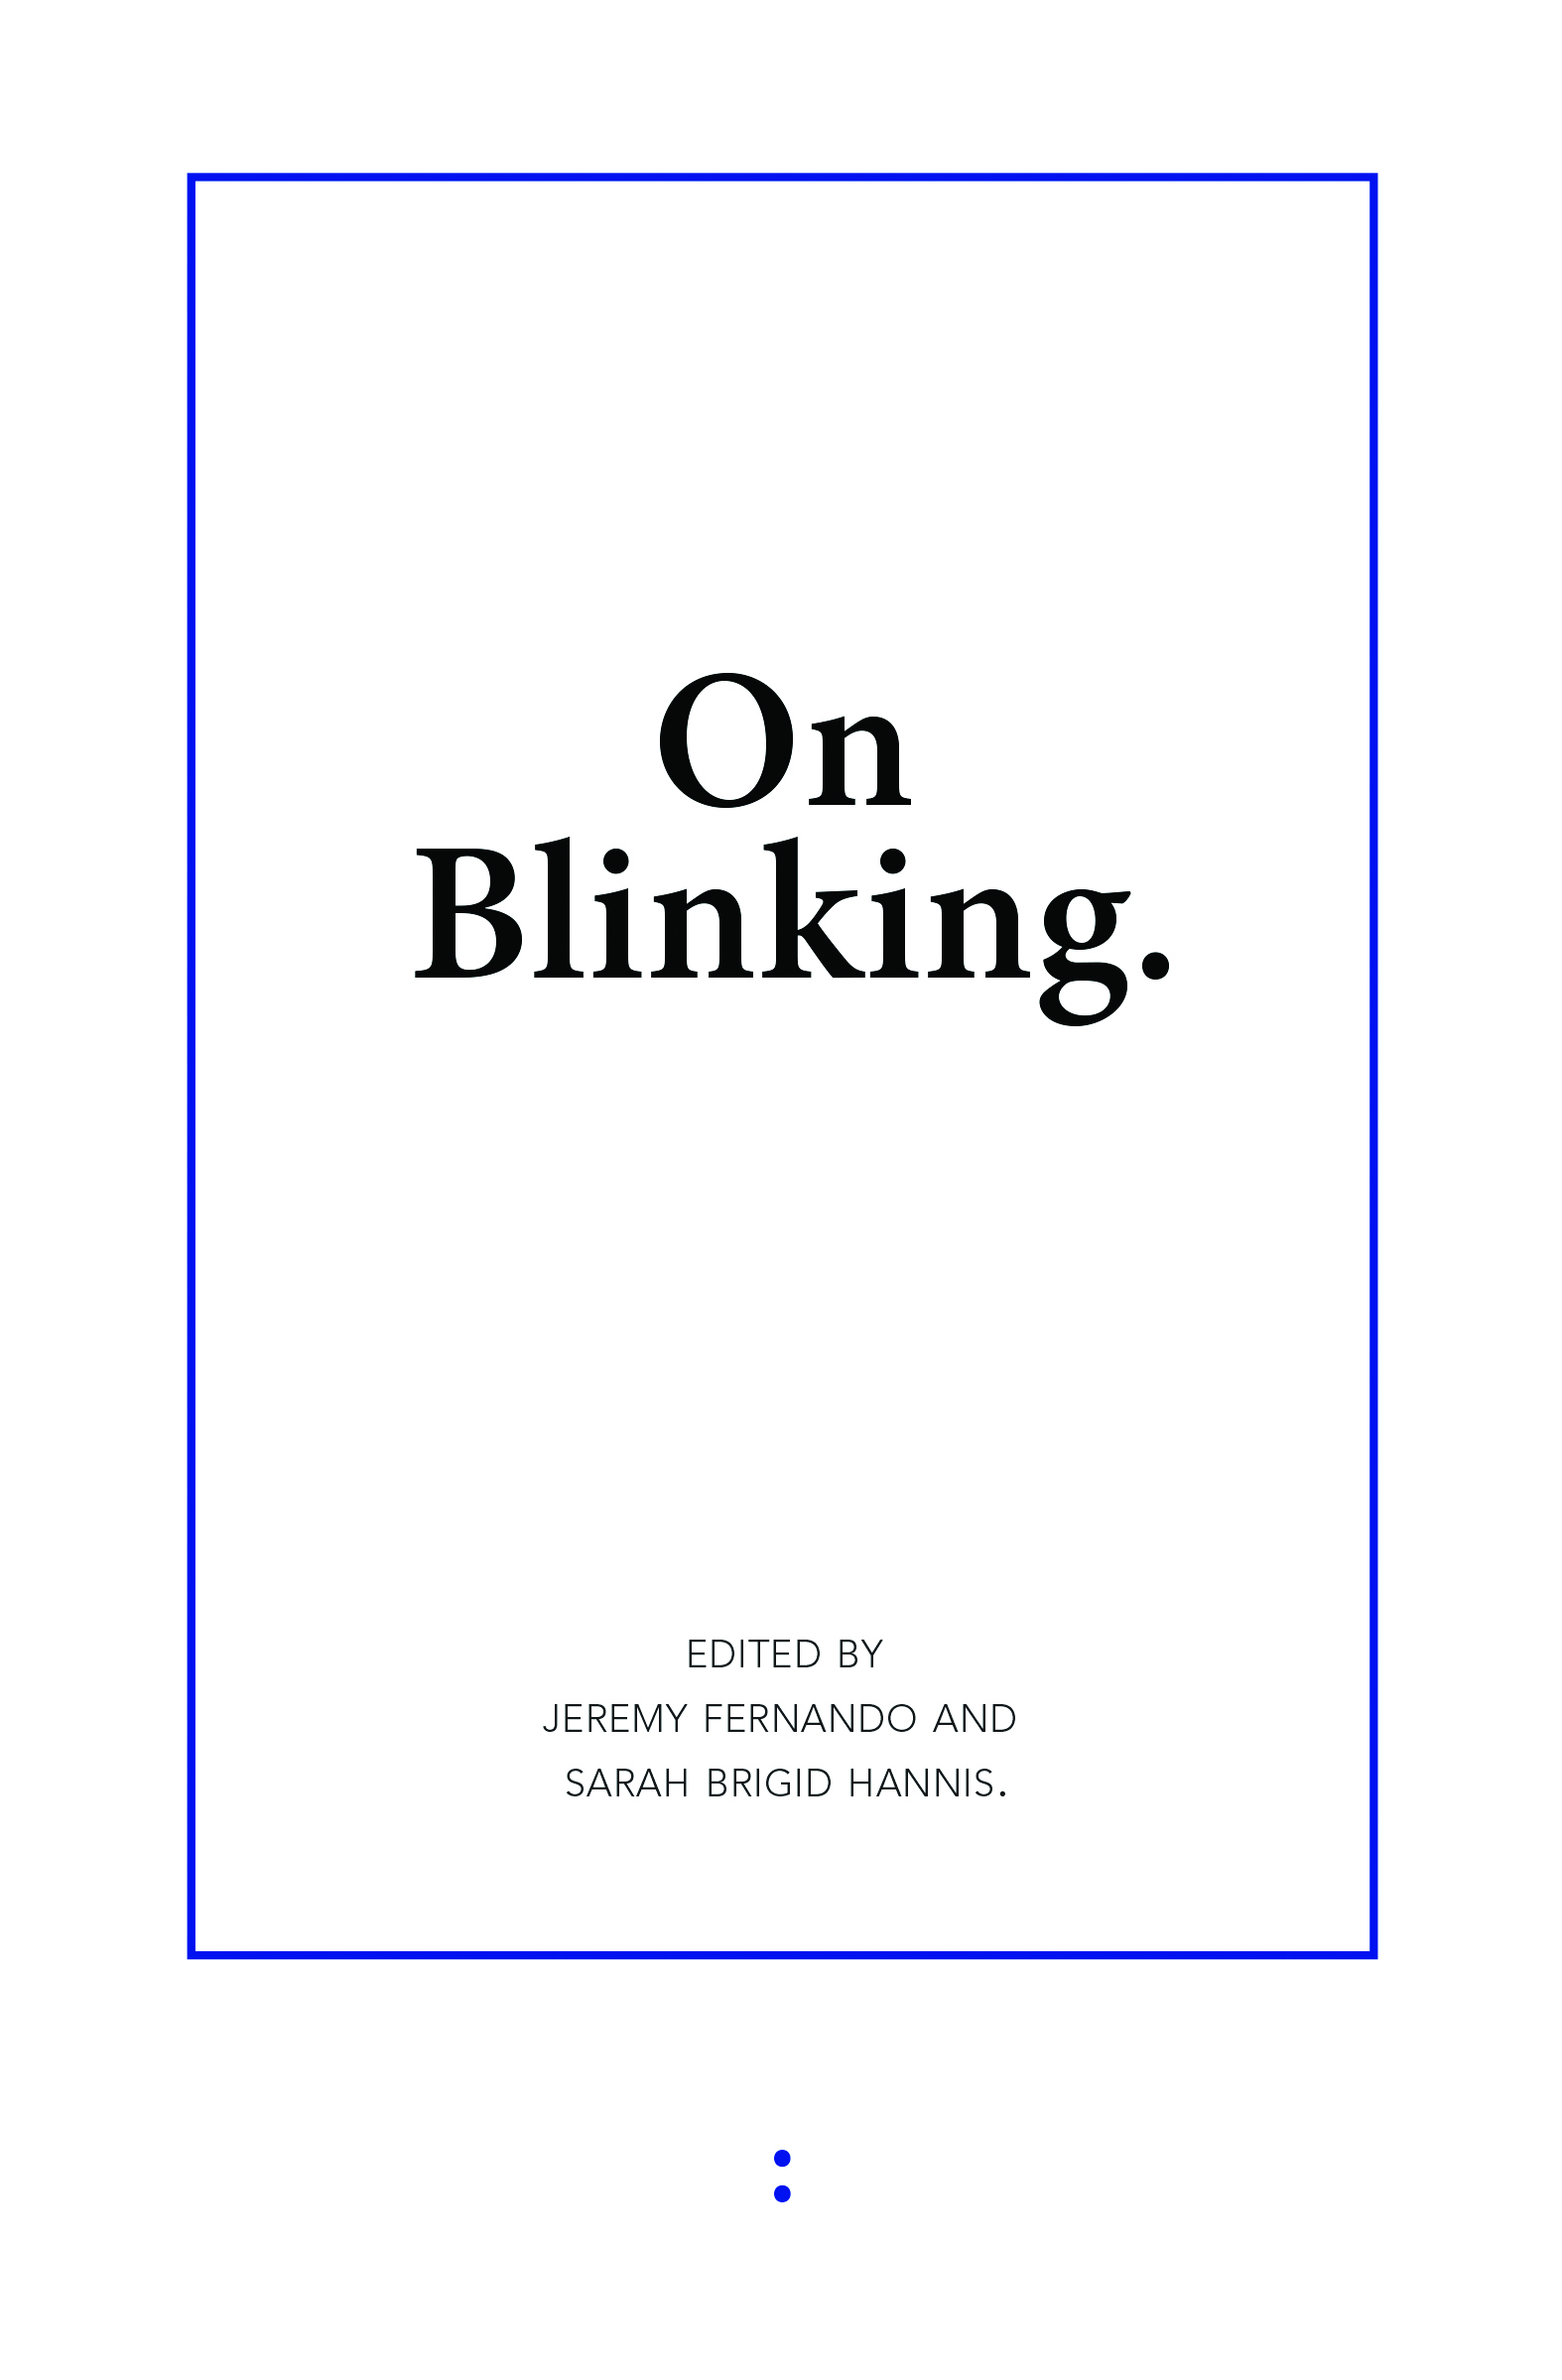 On Blinking (punctum books, 2012)